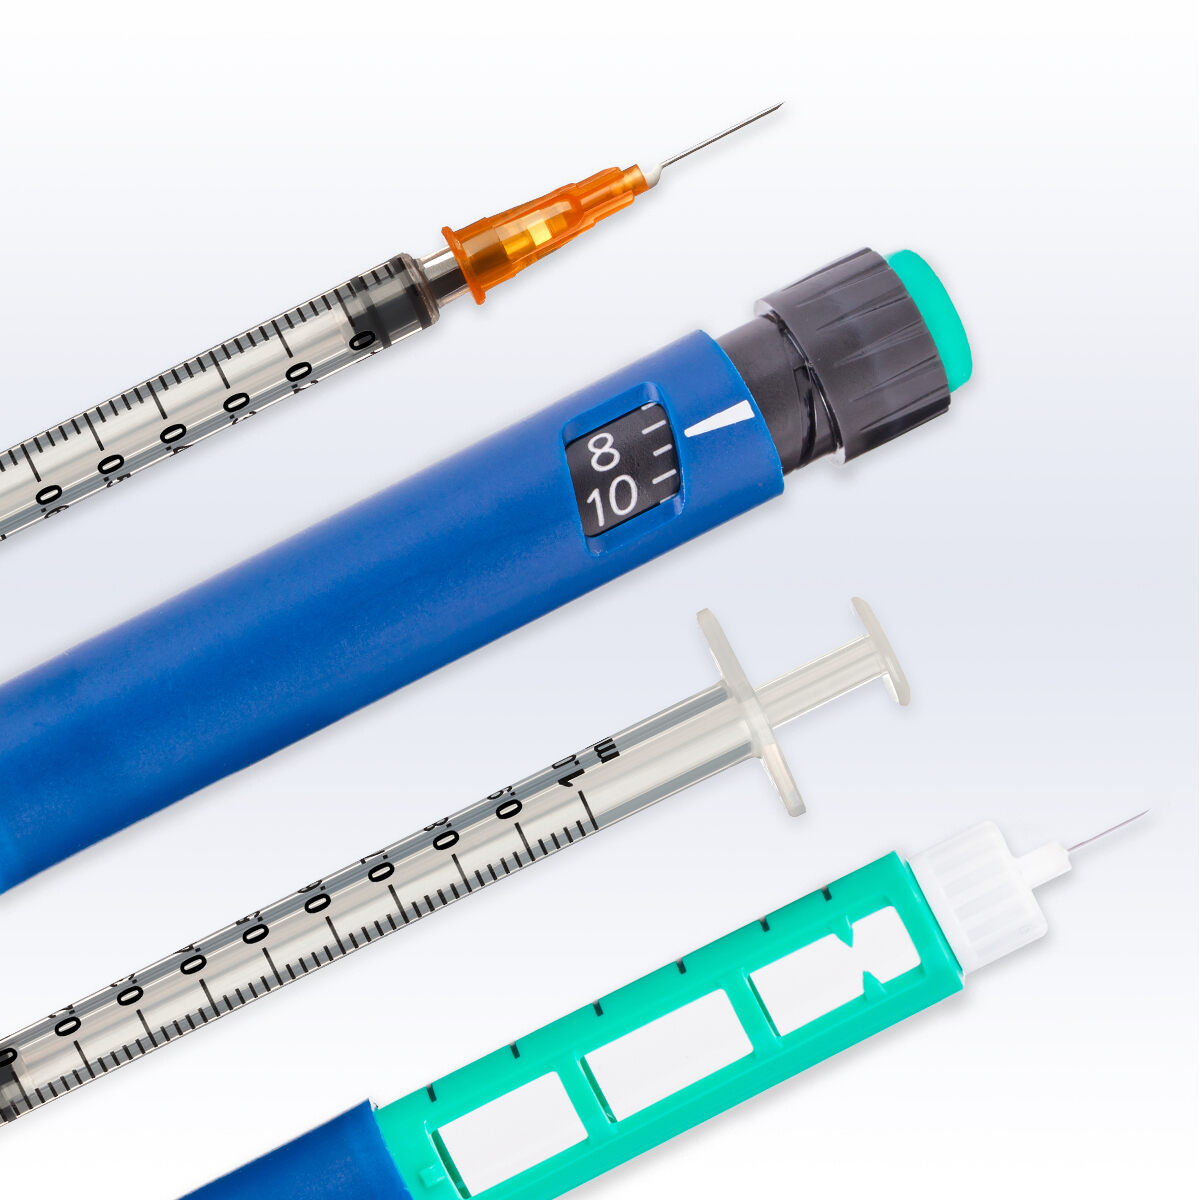 Needle Offers & Bolus Insulin Diabetes Savings